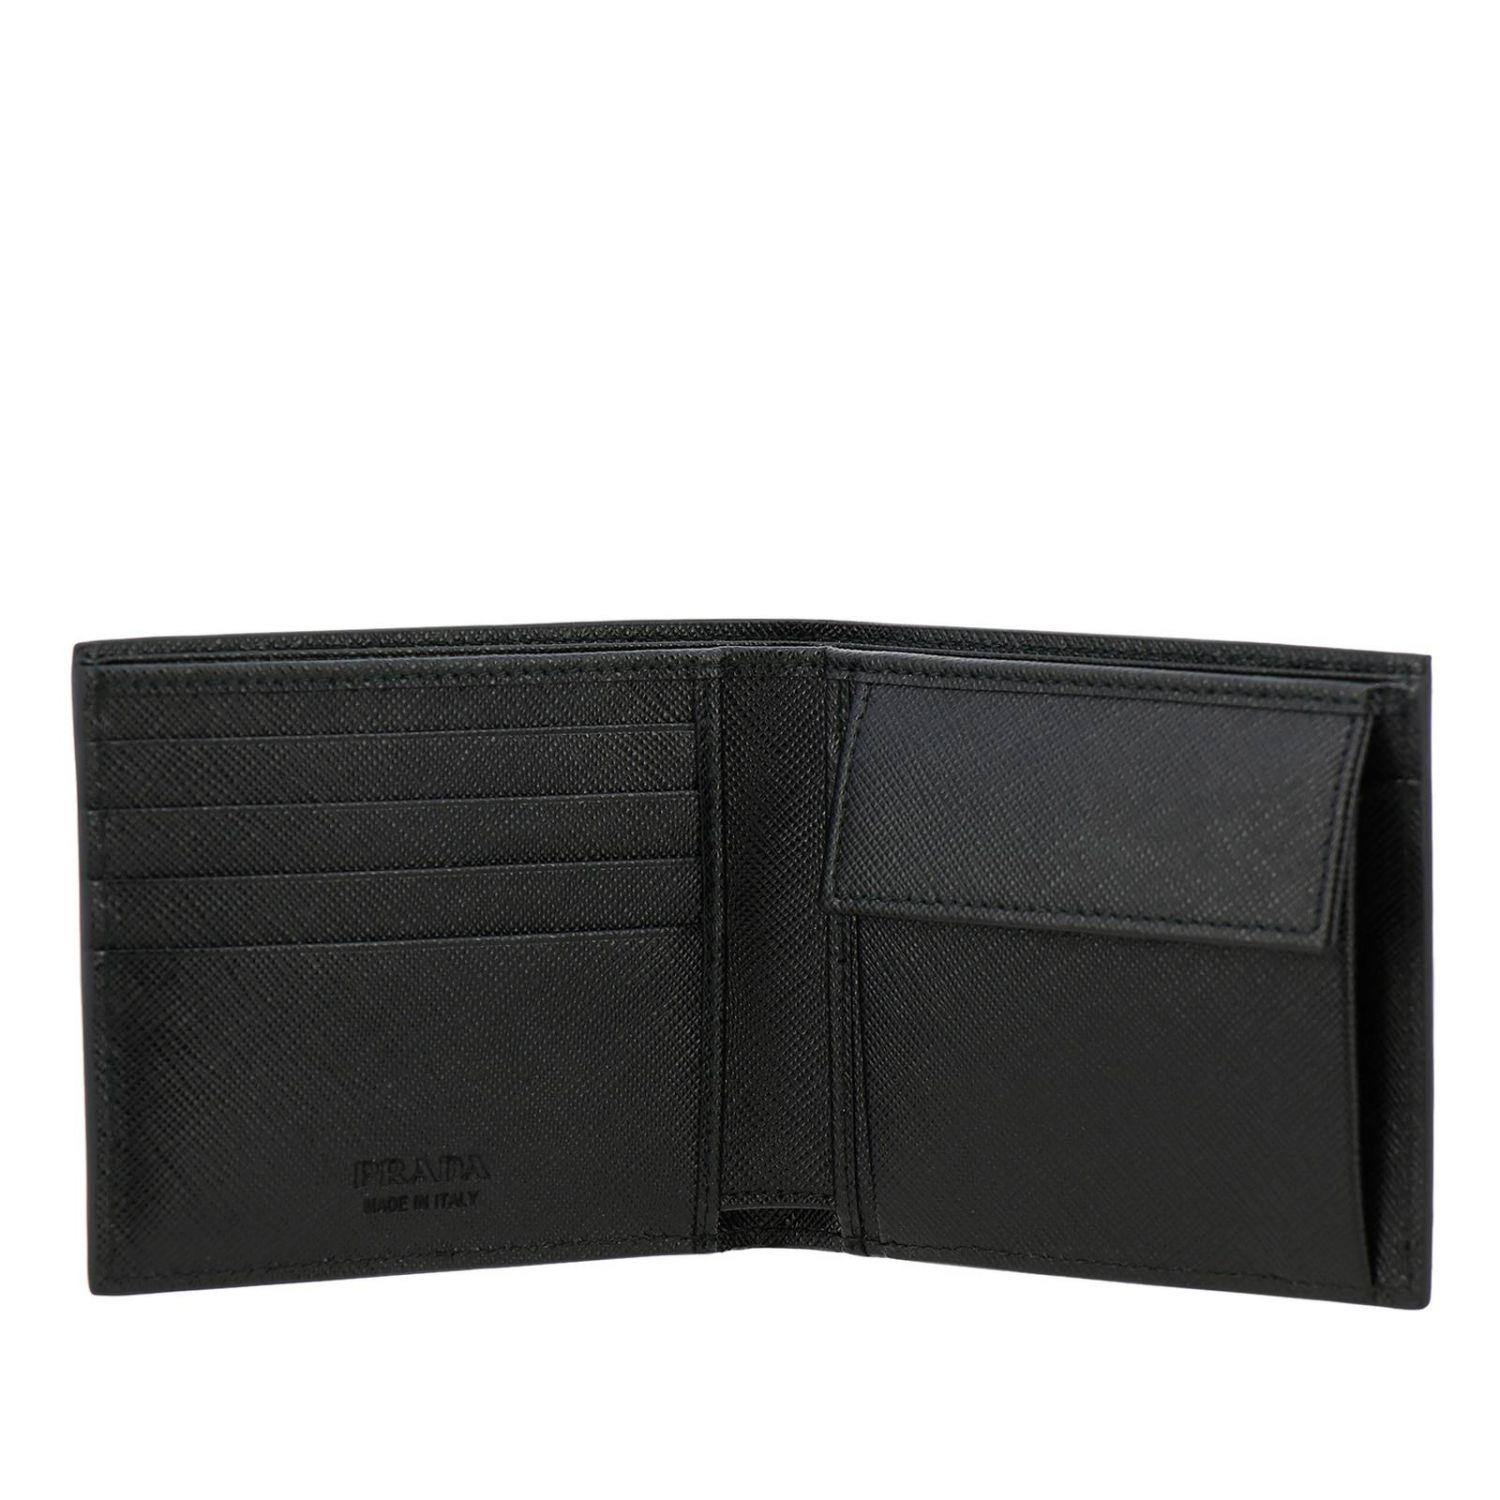 Prada Wallet Men in Black for Men - Lyst